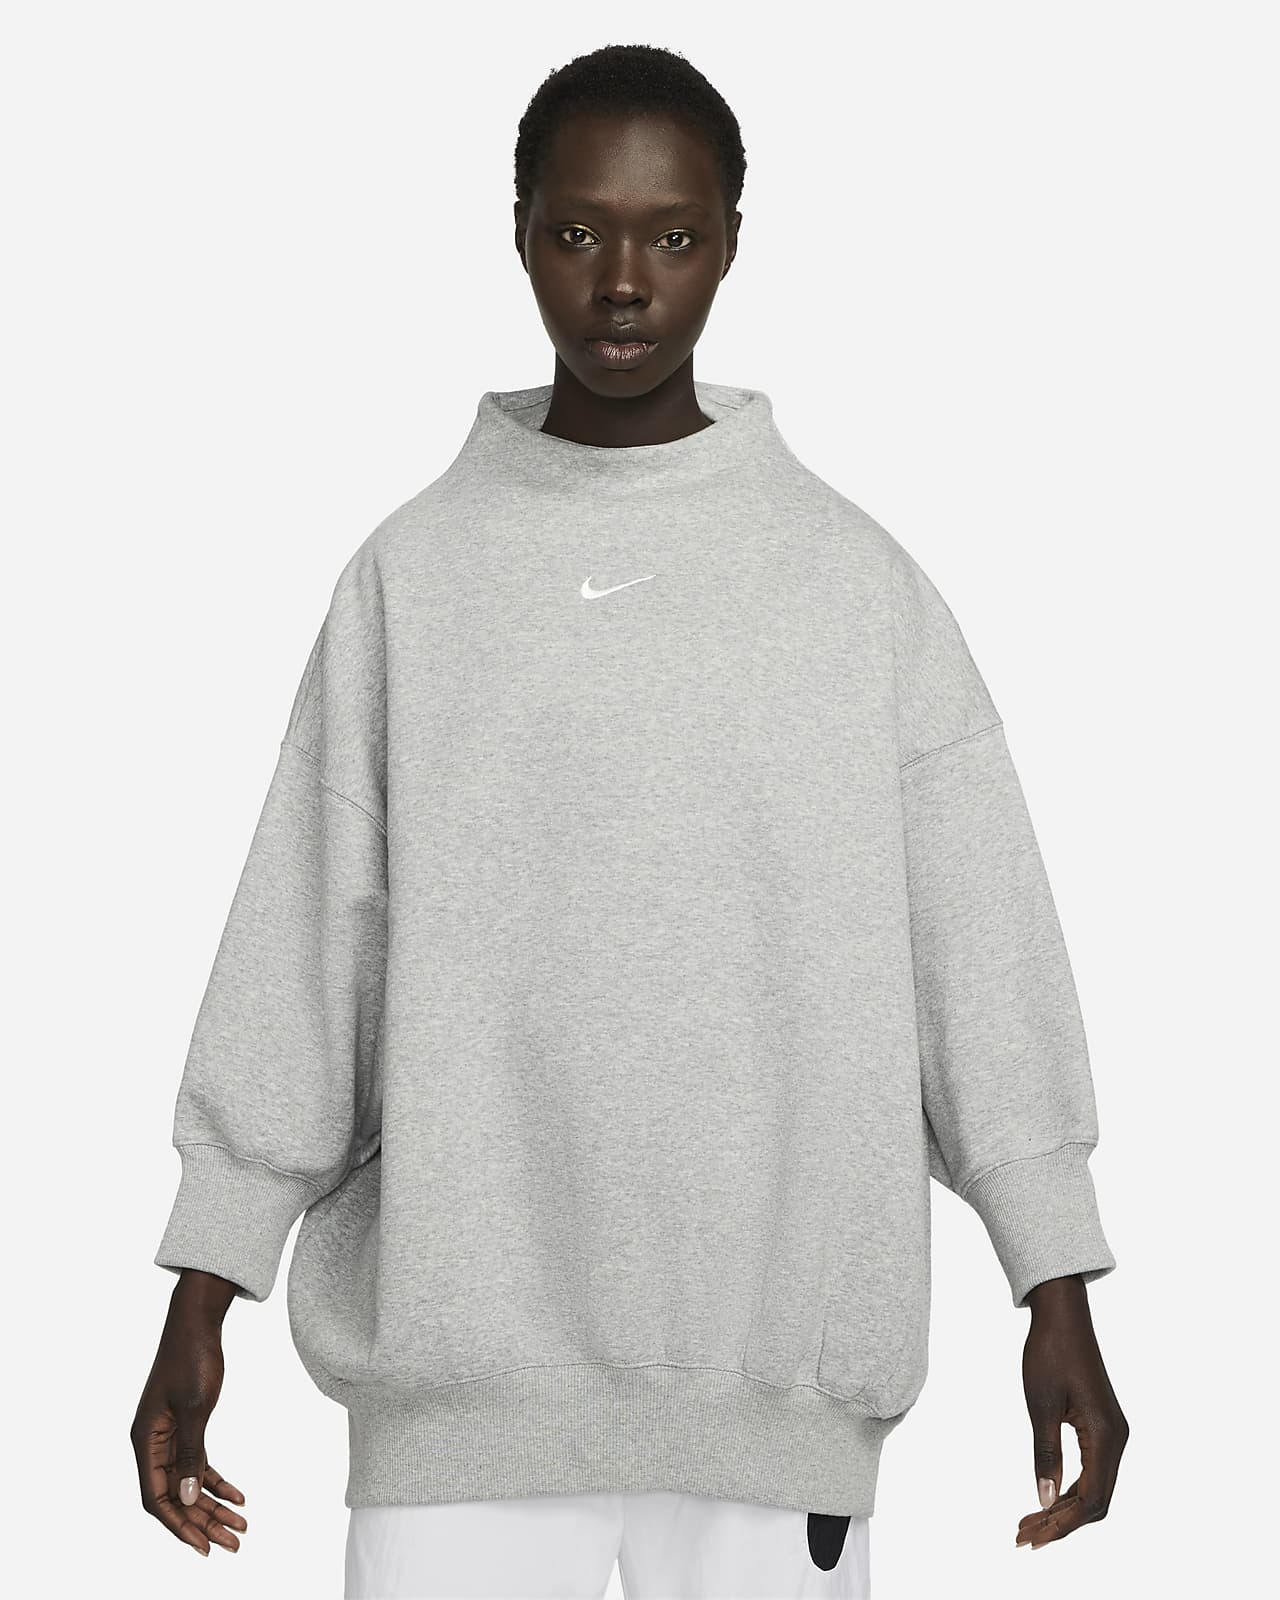 Sweatshirt extremamente folgada de gola subida com mangas de 3/4 Nike Sportswear Phoenix Fleece para mulher